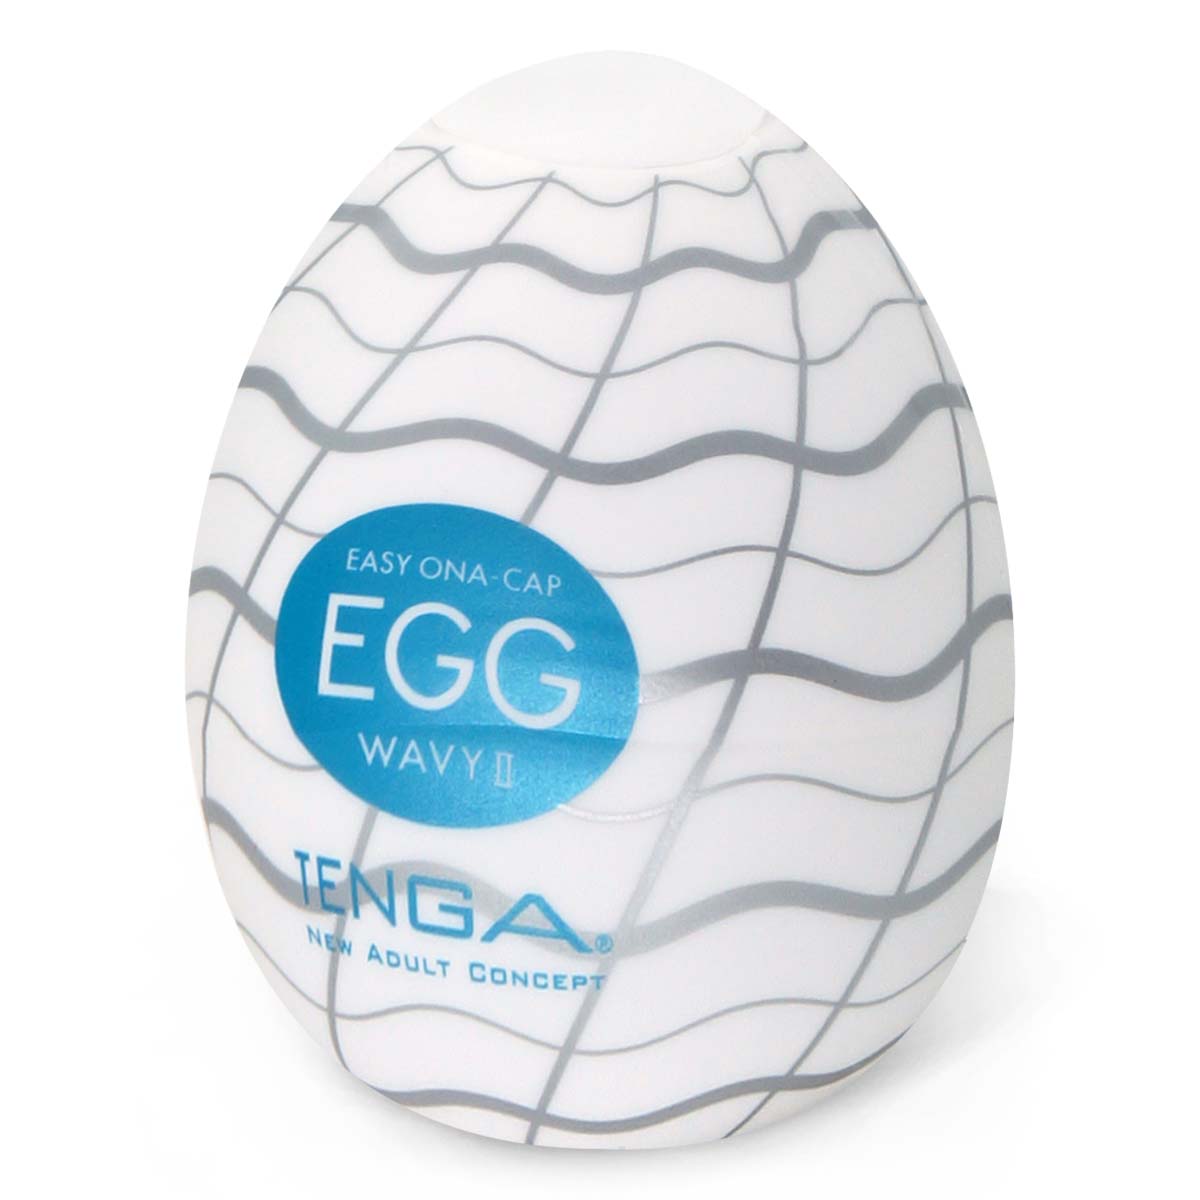 TENGA EGG WAVY 2-TENGA-TENGA 香港網上專門店 - 專營 TENGA 飛機杯及潤滑劑